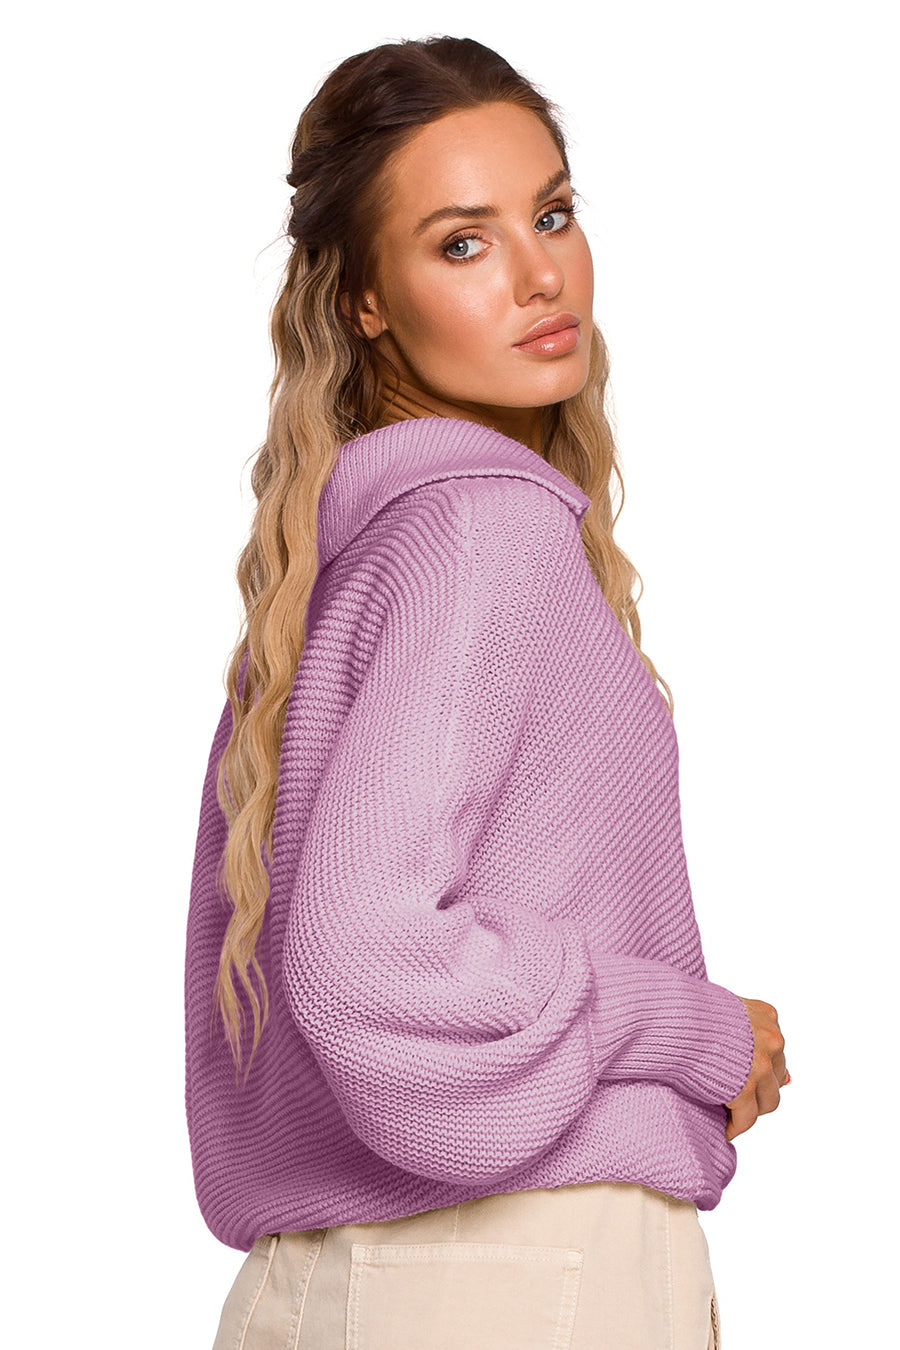 Дамски пуловер Tesha, Лилав 4